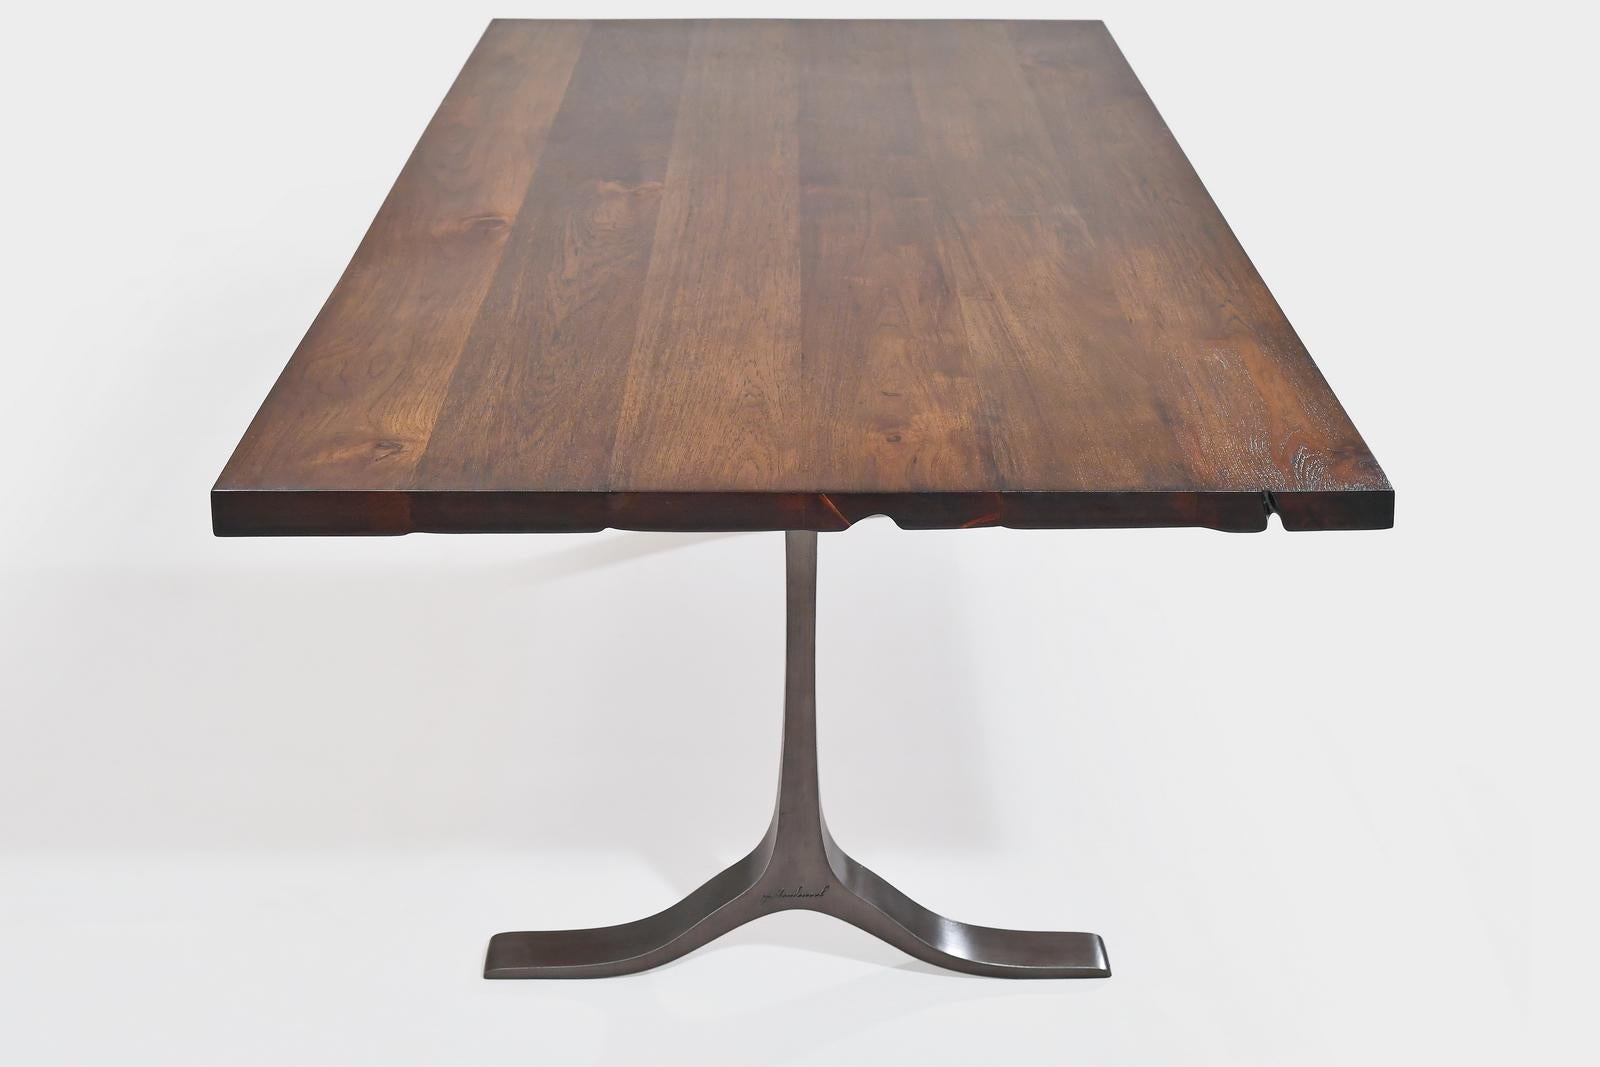 Minimalist Bespoke Table, Reclaimed Teak wood, Sand cast Aluminum Bases by P. Tendercool For Sale